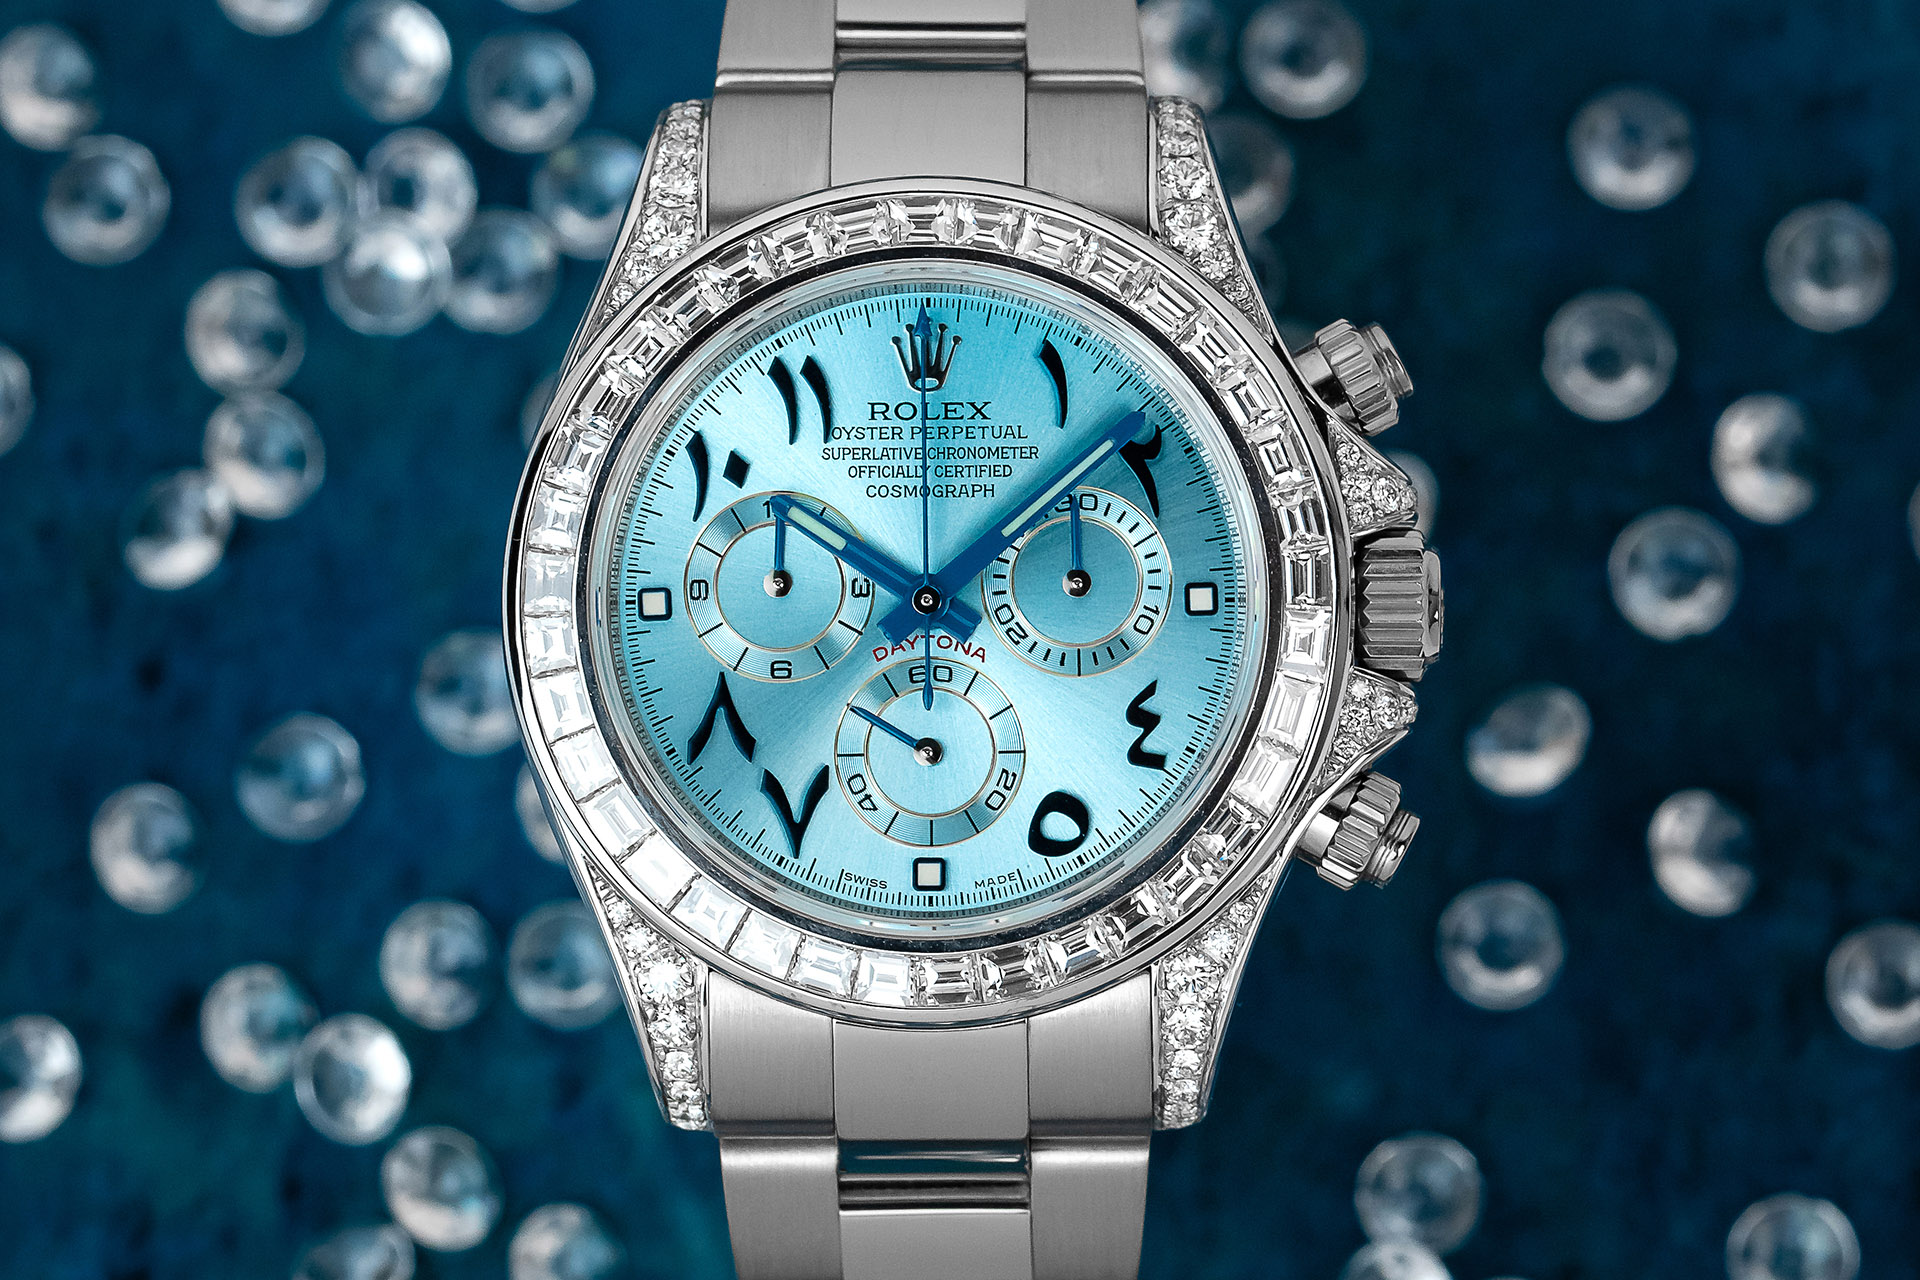 5 Best Rolex Diamond Watches to Buy in 2021